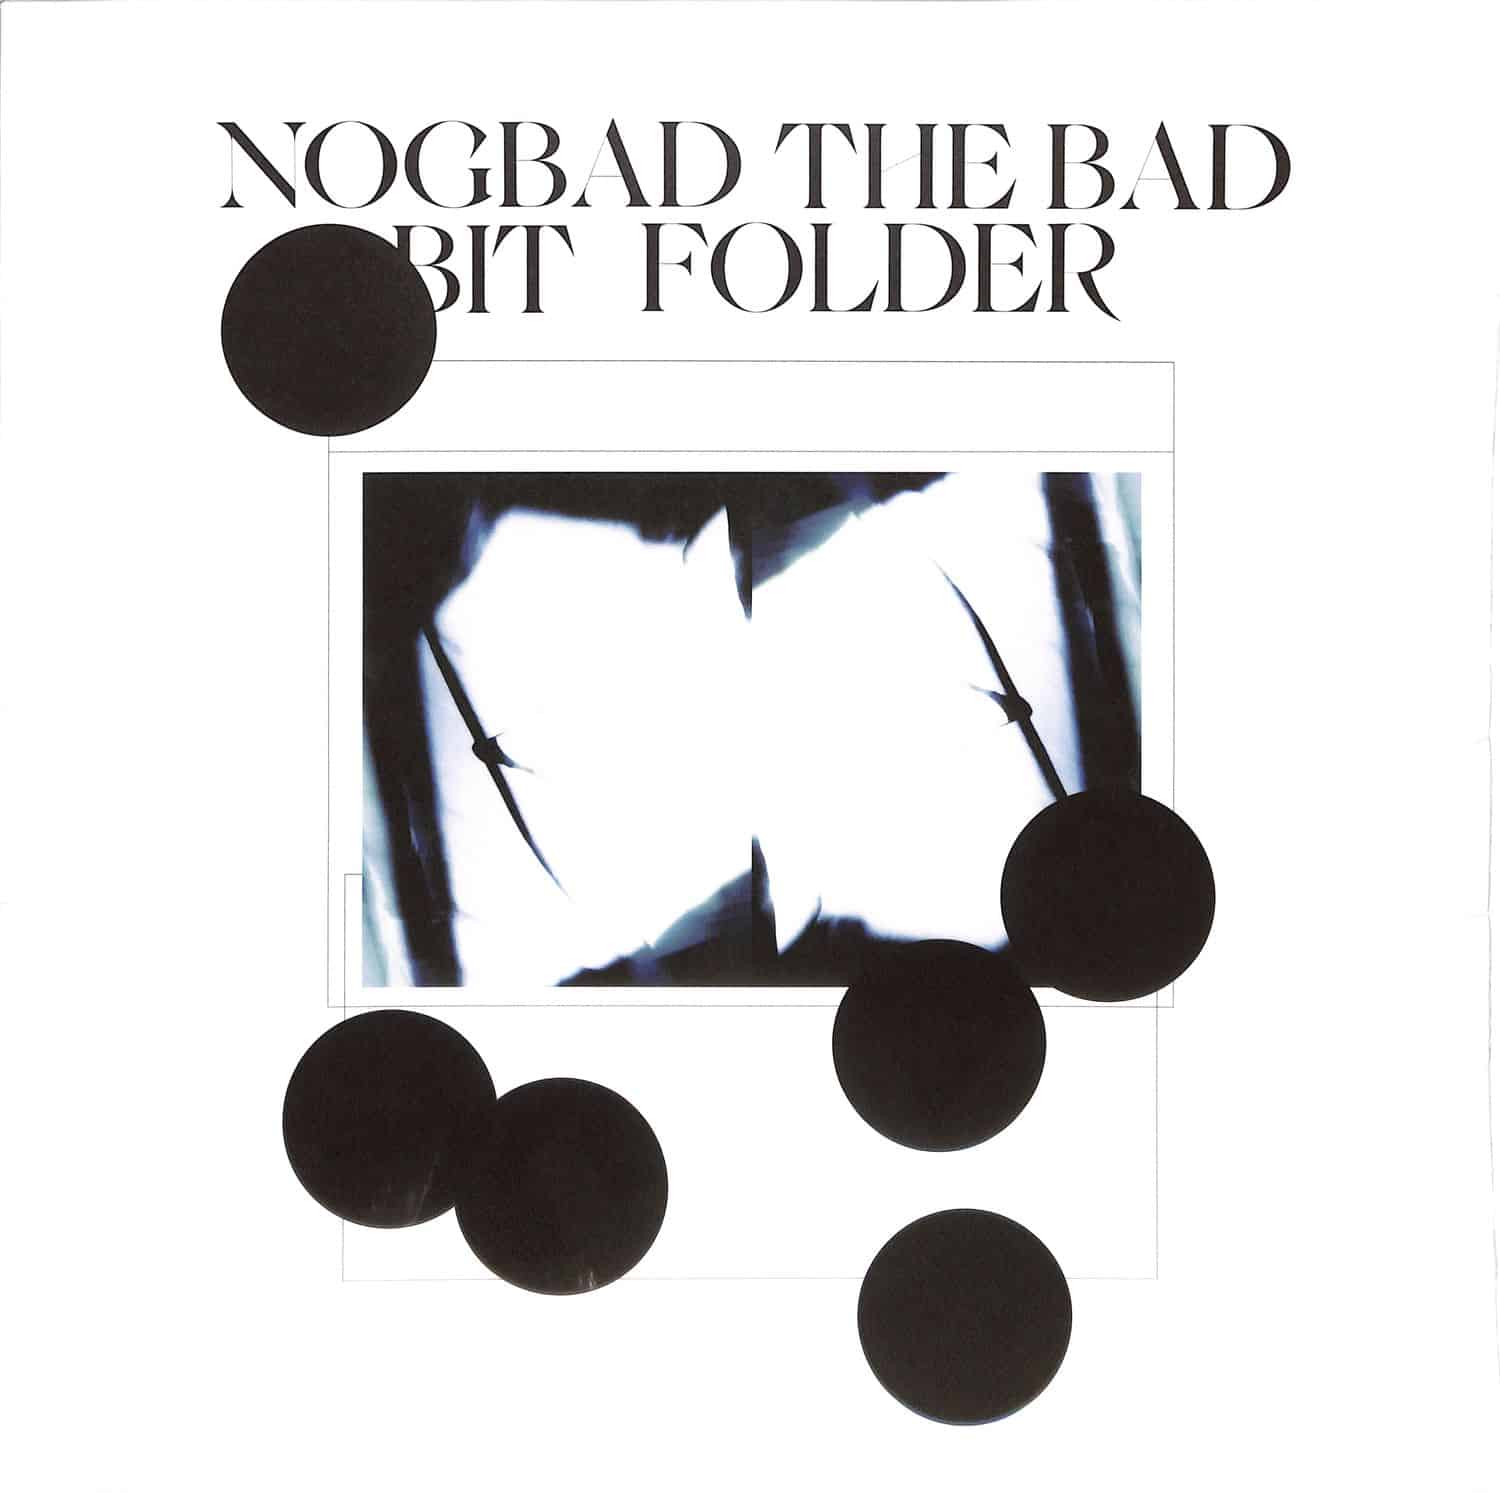 Bit Folder - NOGBAD THE BAD EP